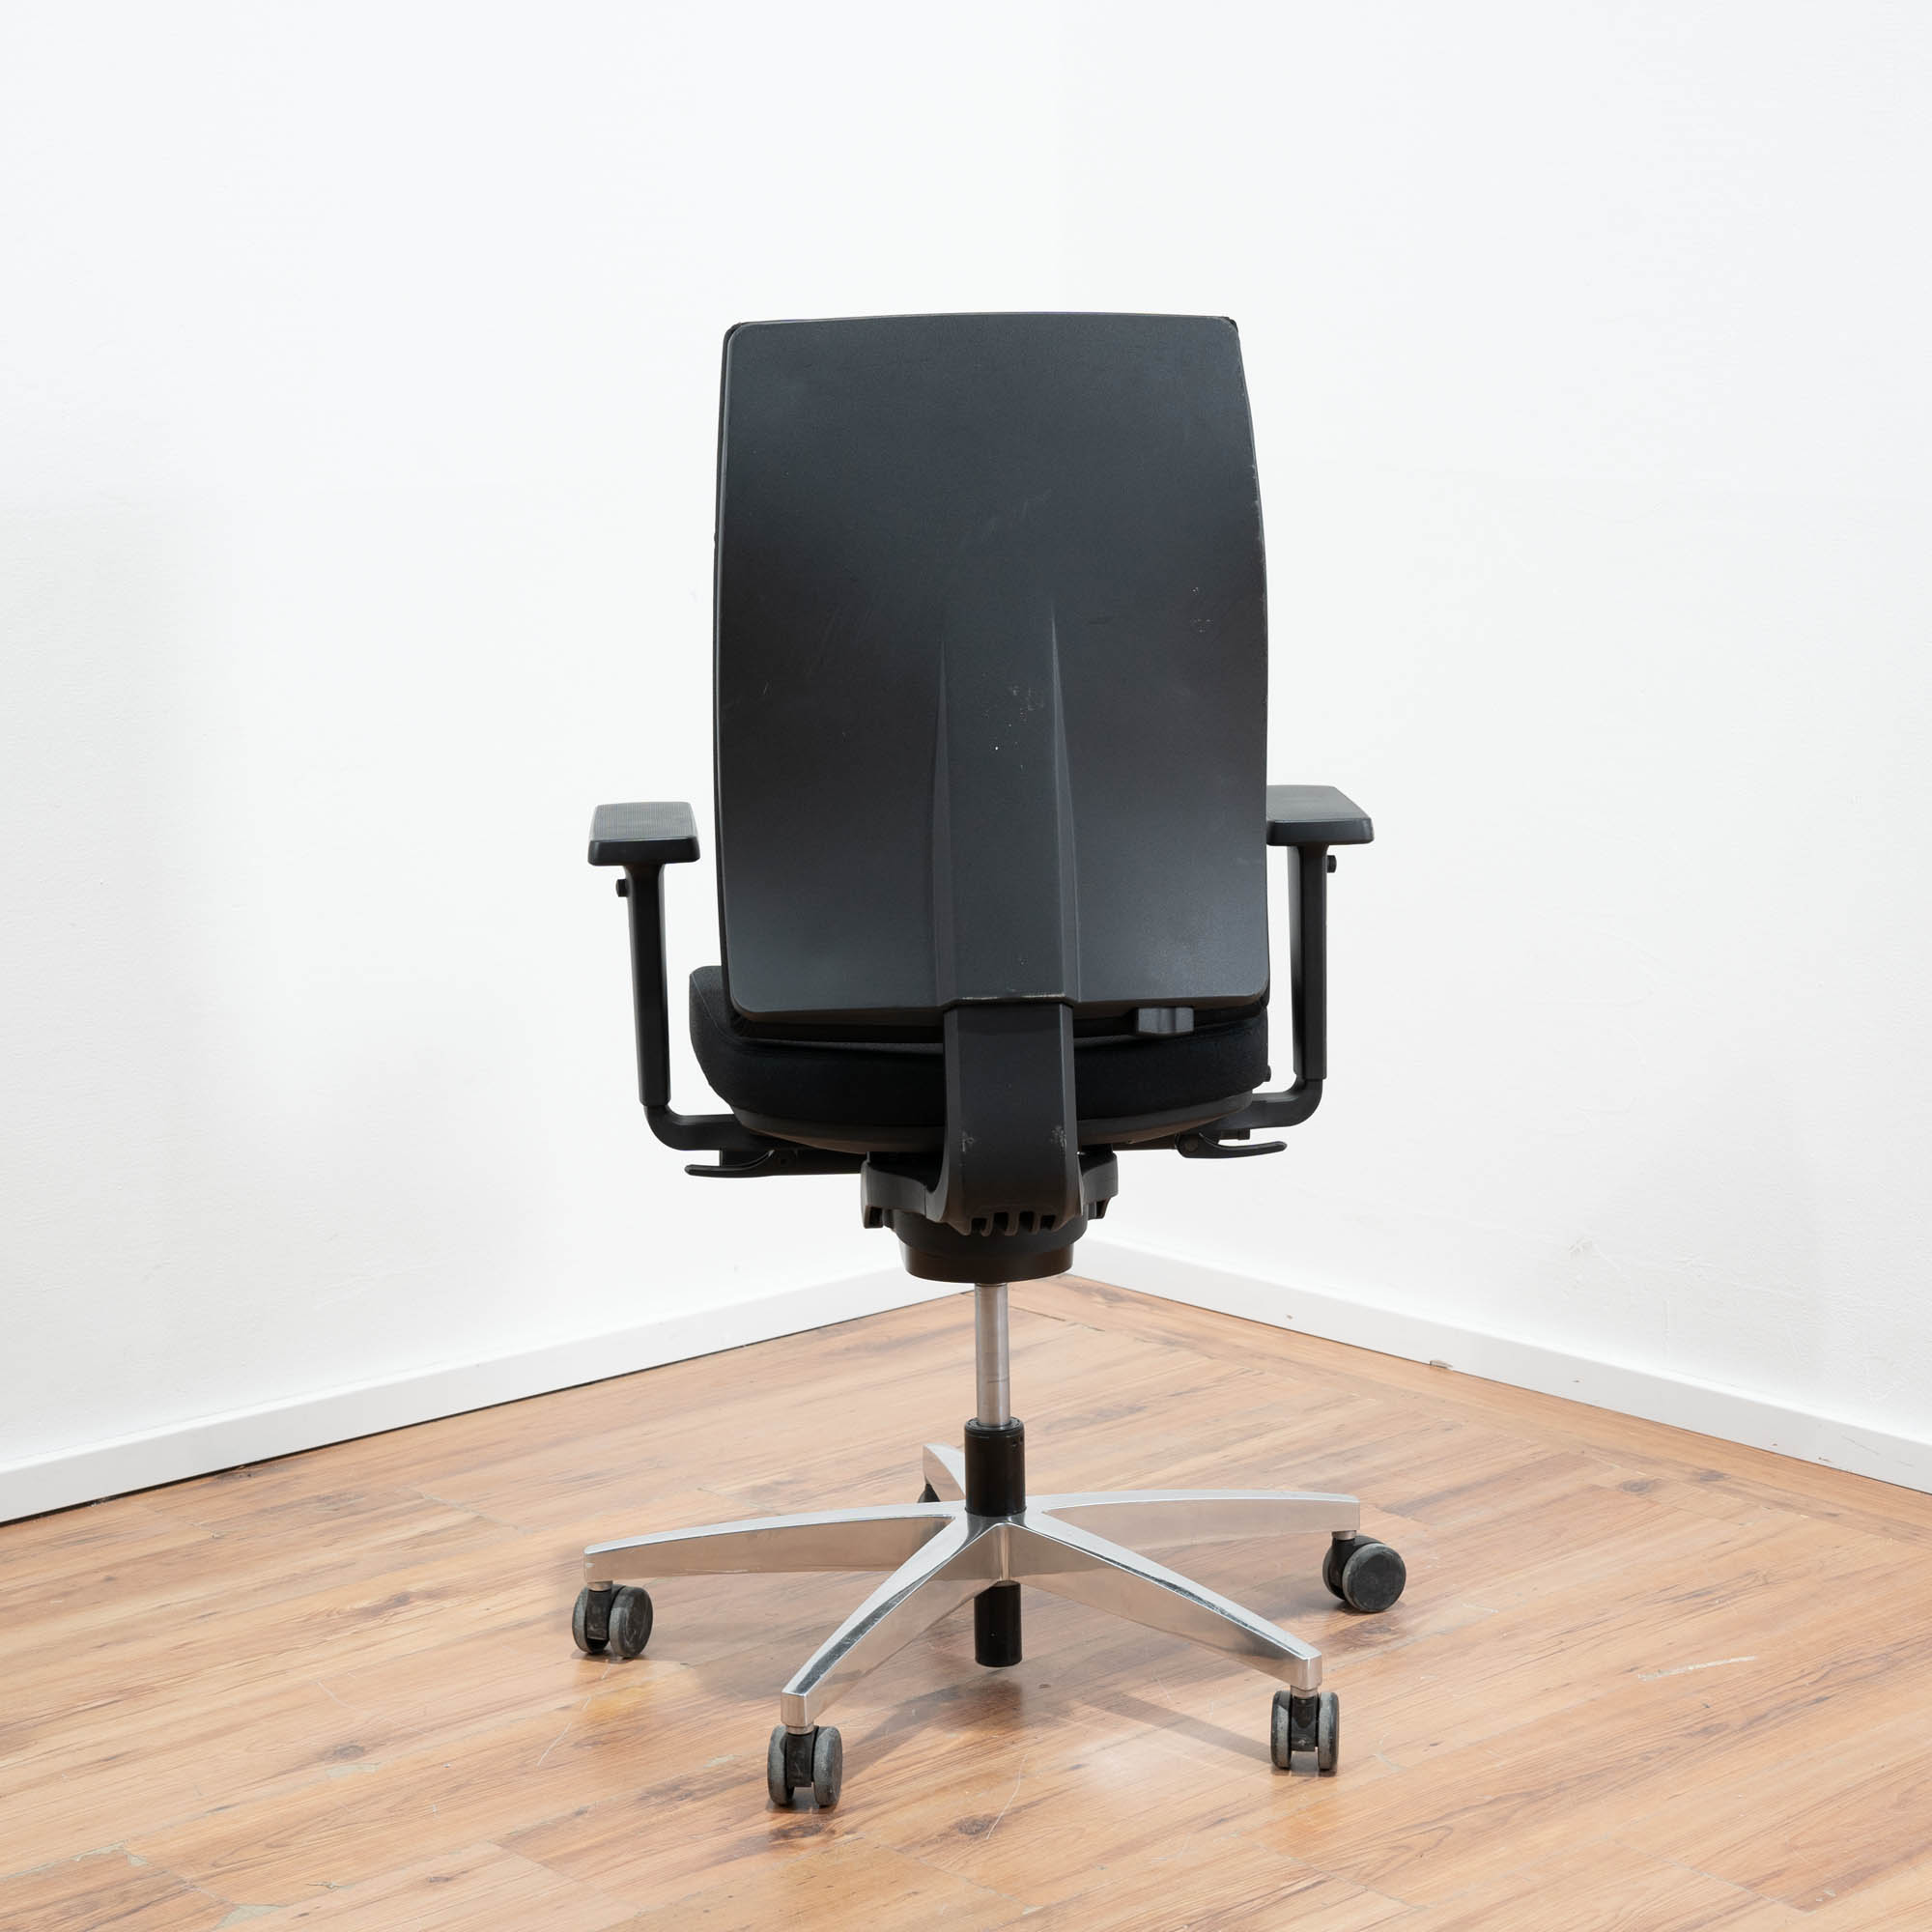 Steifensand Bürodrehstuhl Stoff schwarz - Rückenlehne Stoff schwarz - Chromgestell 